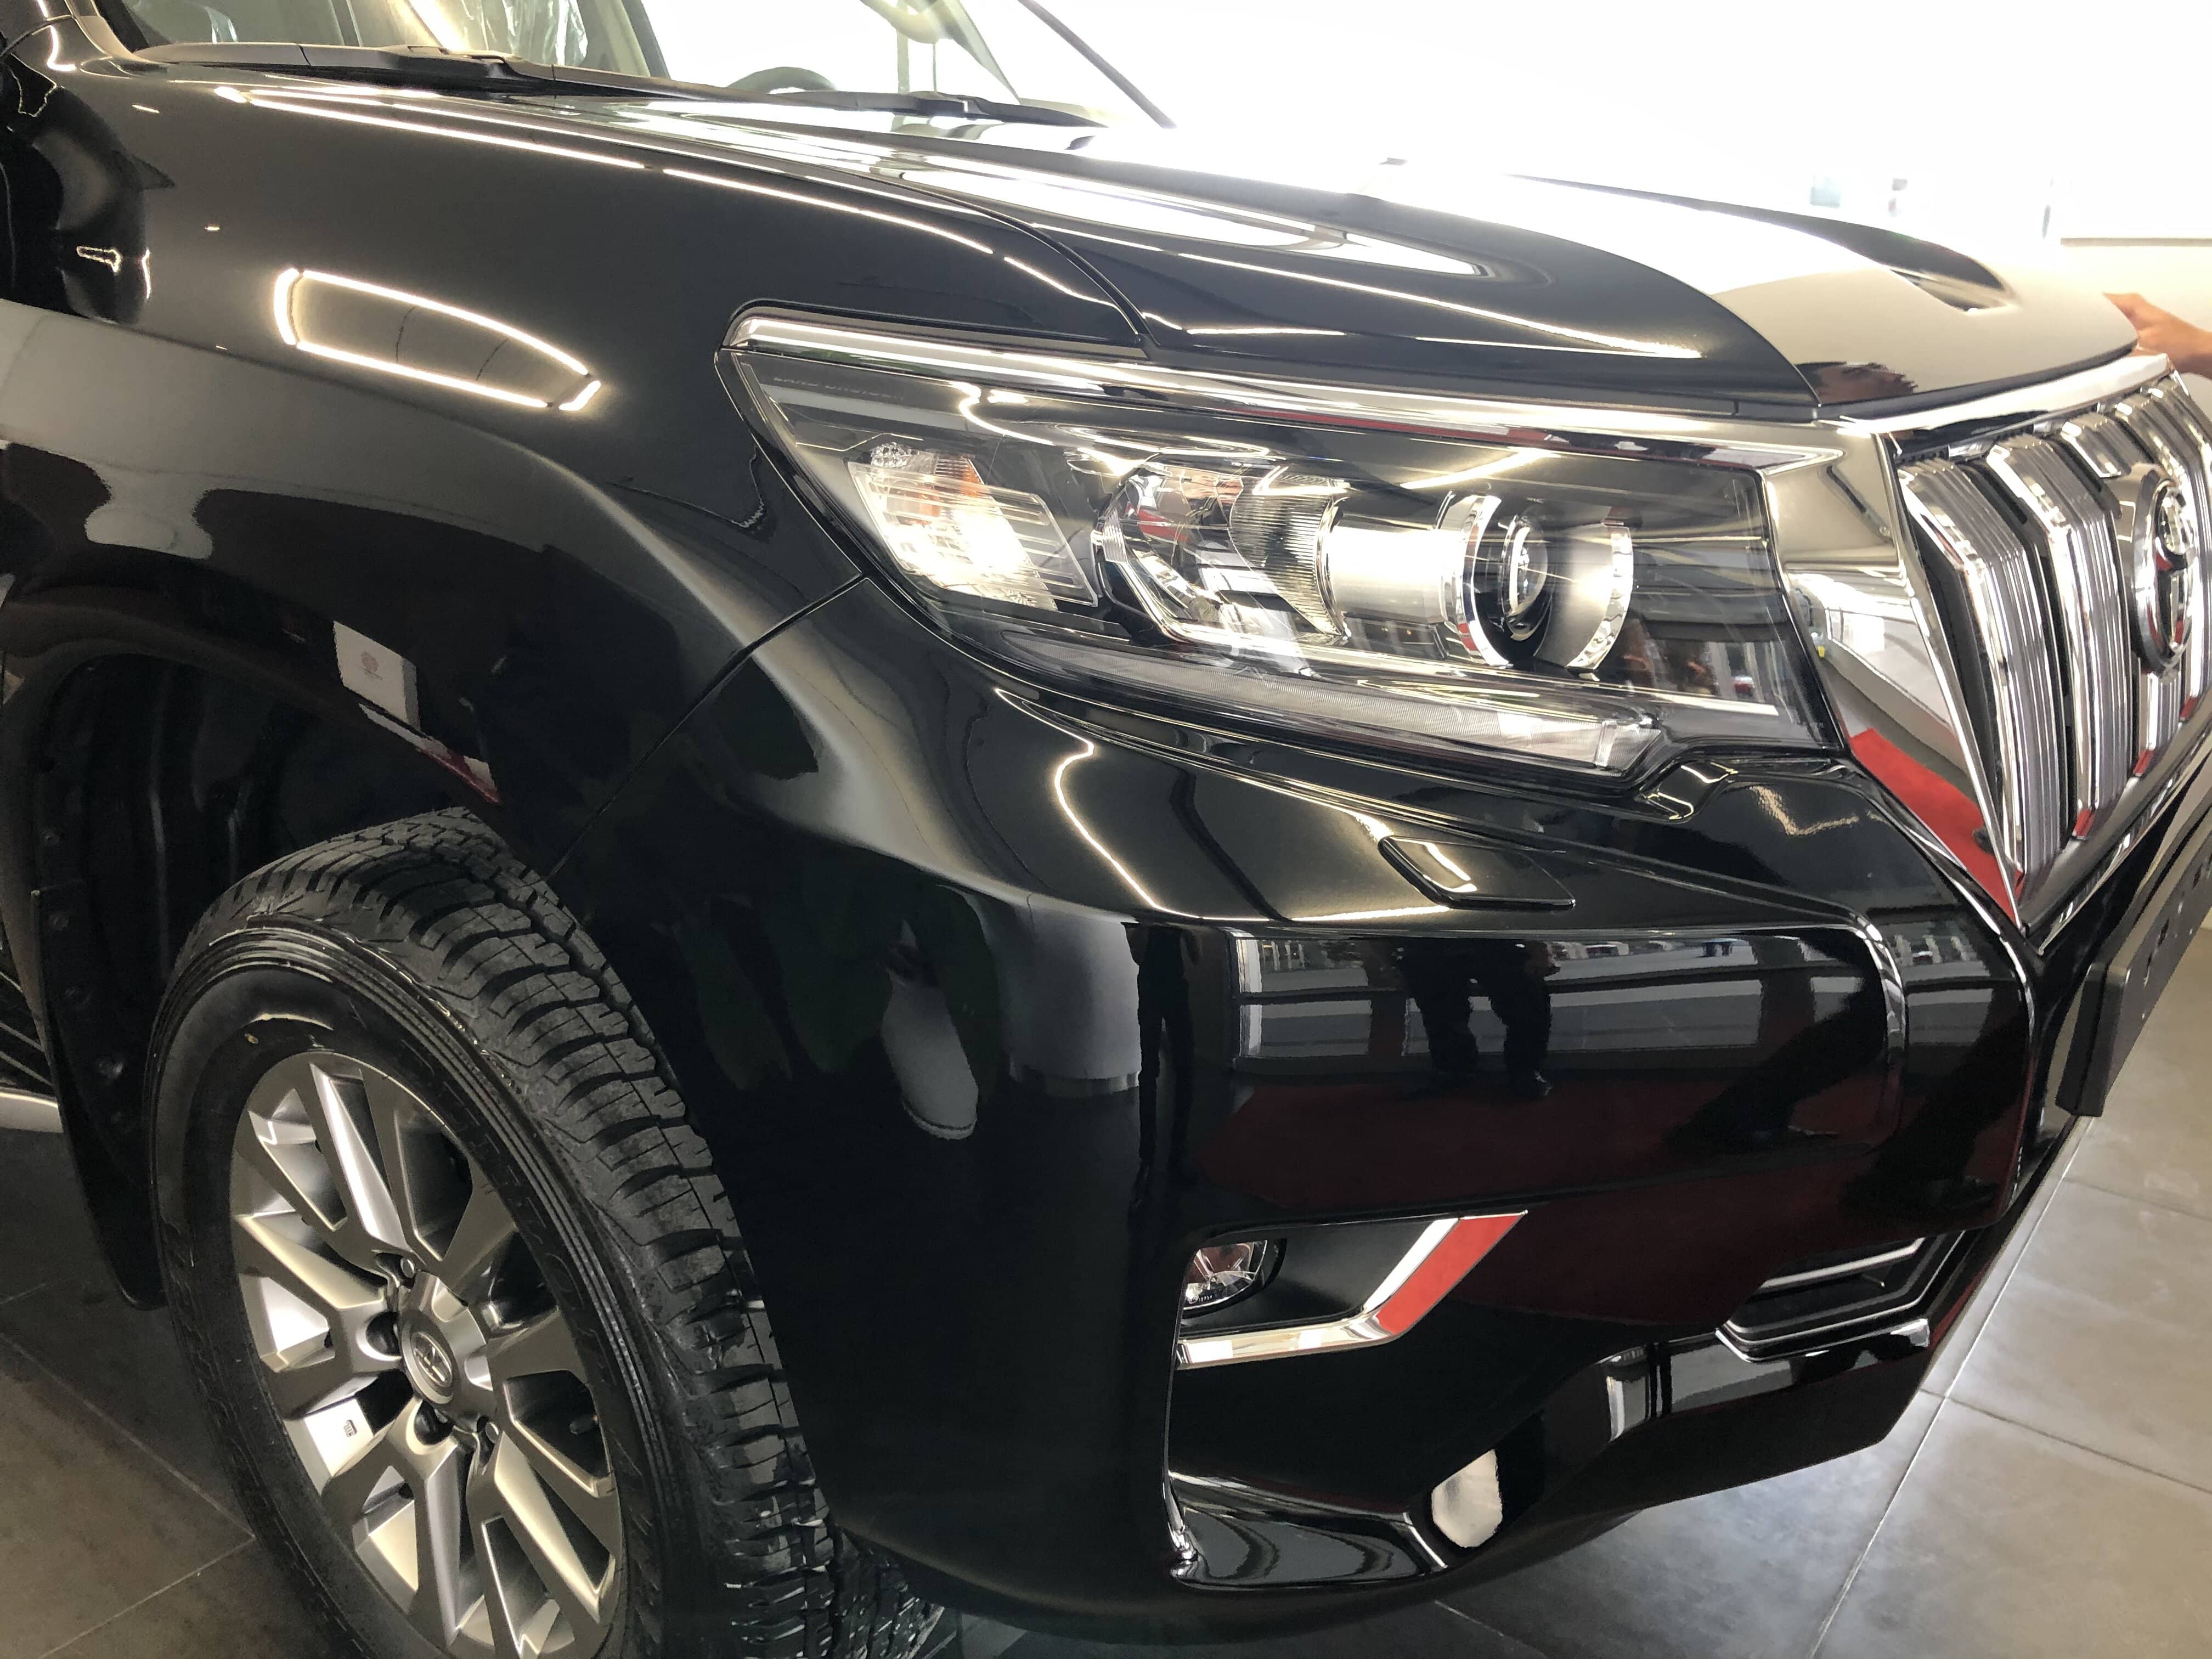 Toyota Land Cruiser Prado Da Nang has a spherical headlight system with modern LED lighting technology